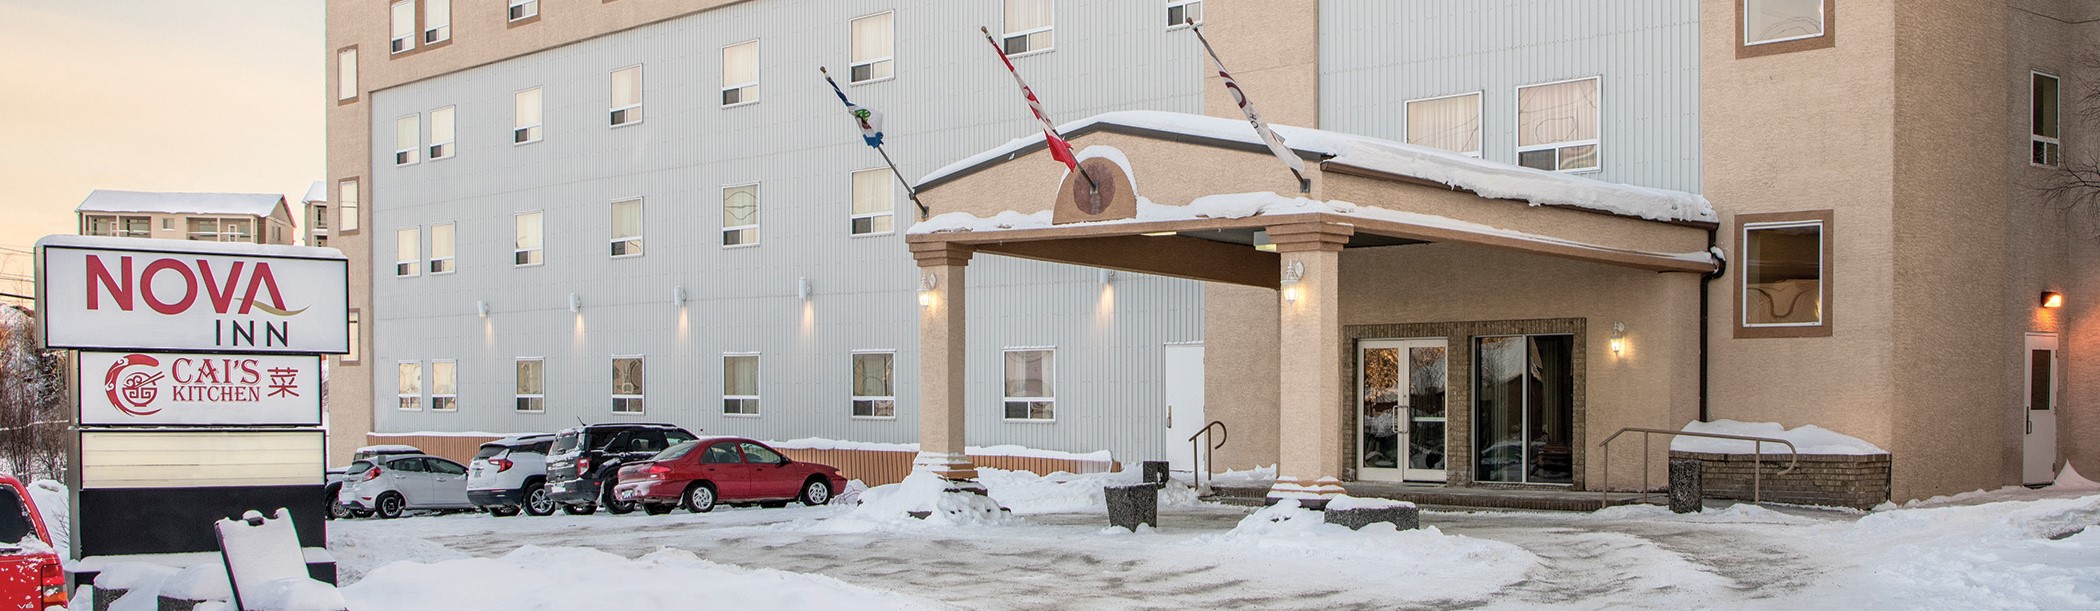 Nova Inn, Yellowknife